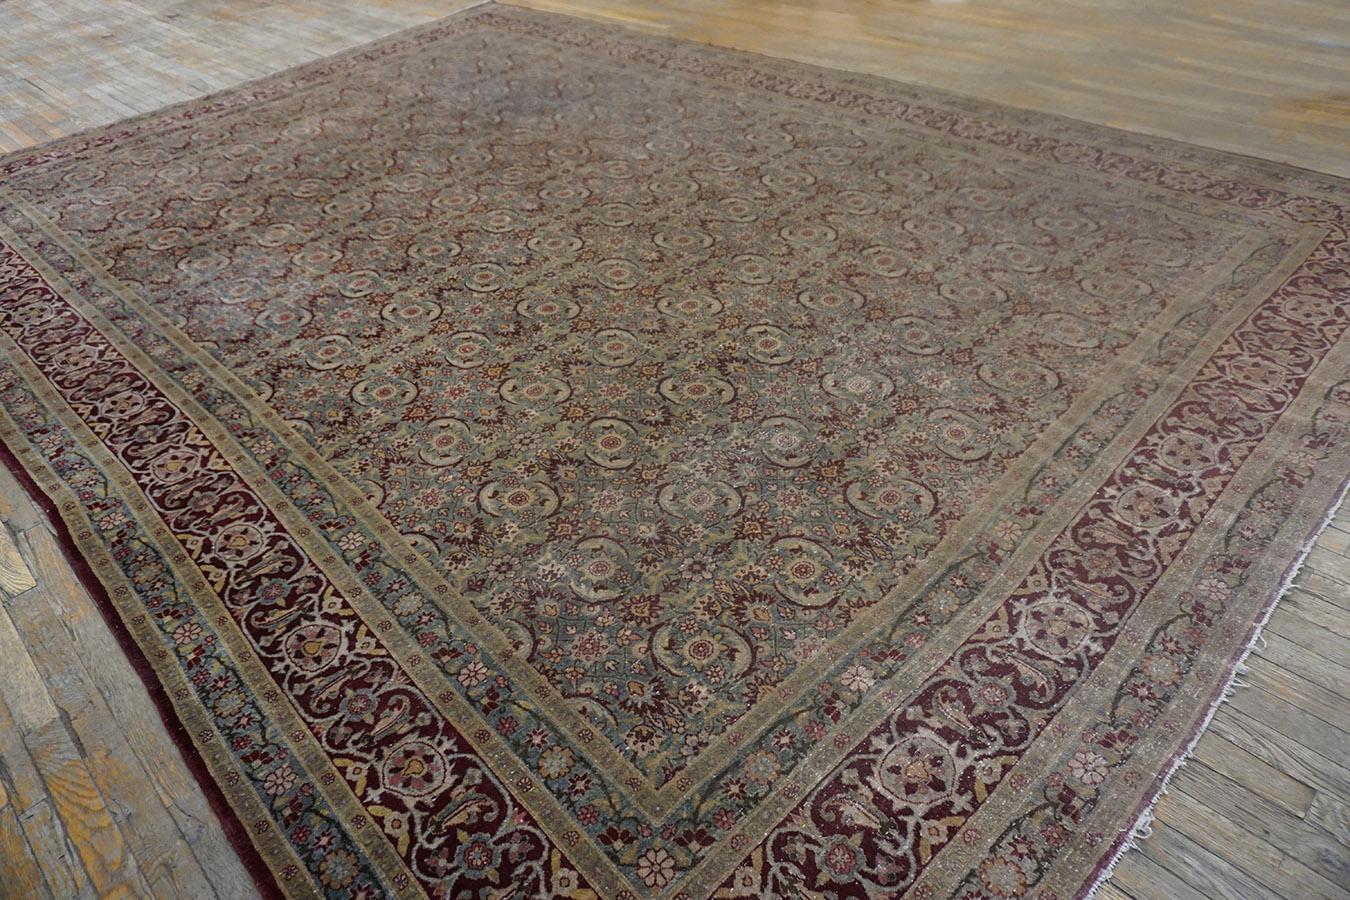 Early 20th Century E. Persian Kirman Carpet
10' x 14'4